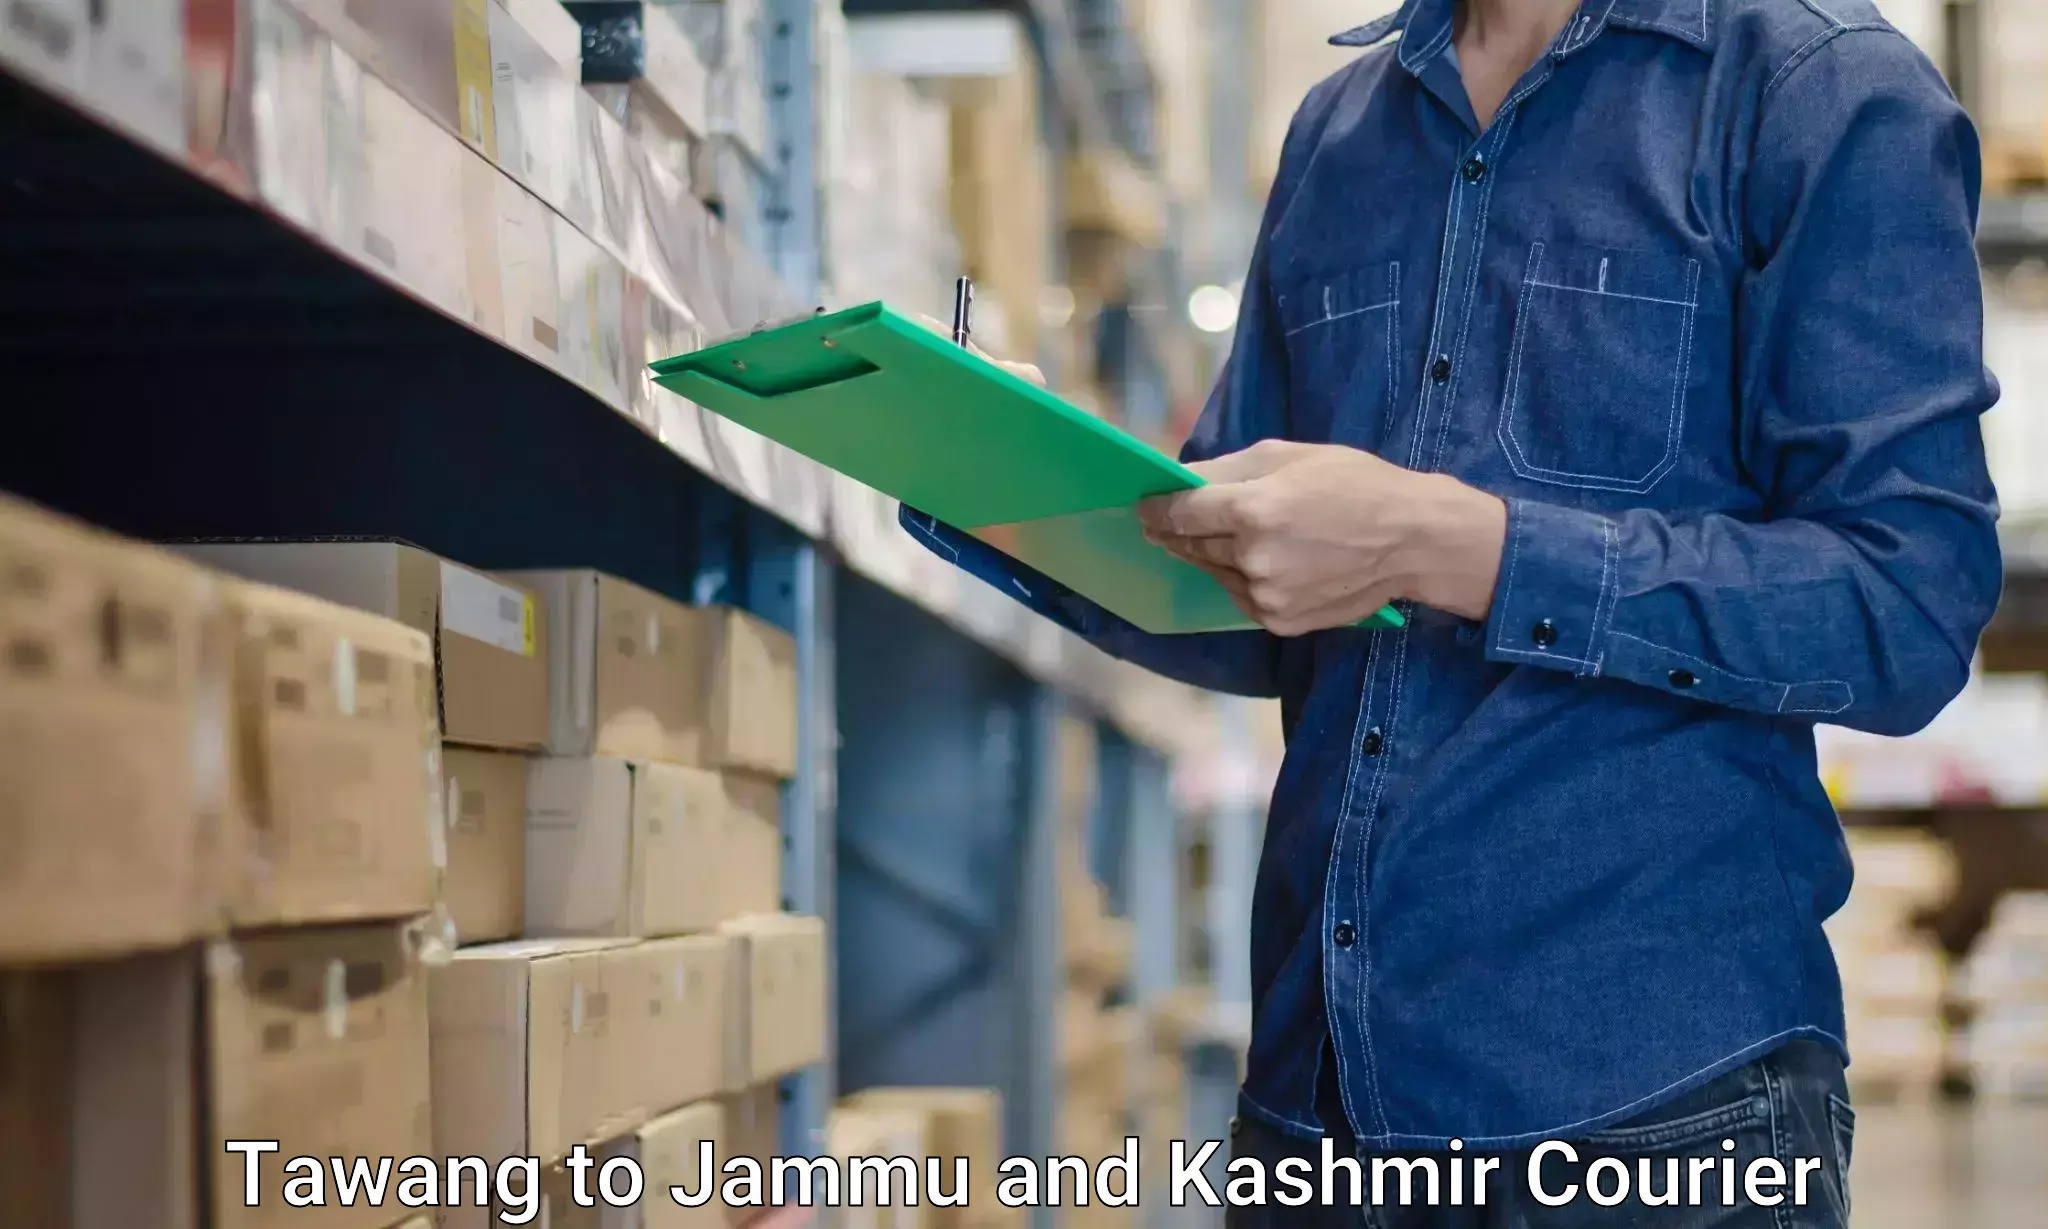 Quality moving and storage Tawang to Srinagar Kashmir